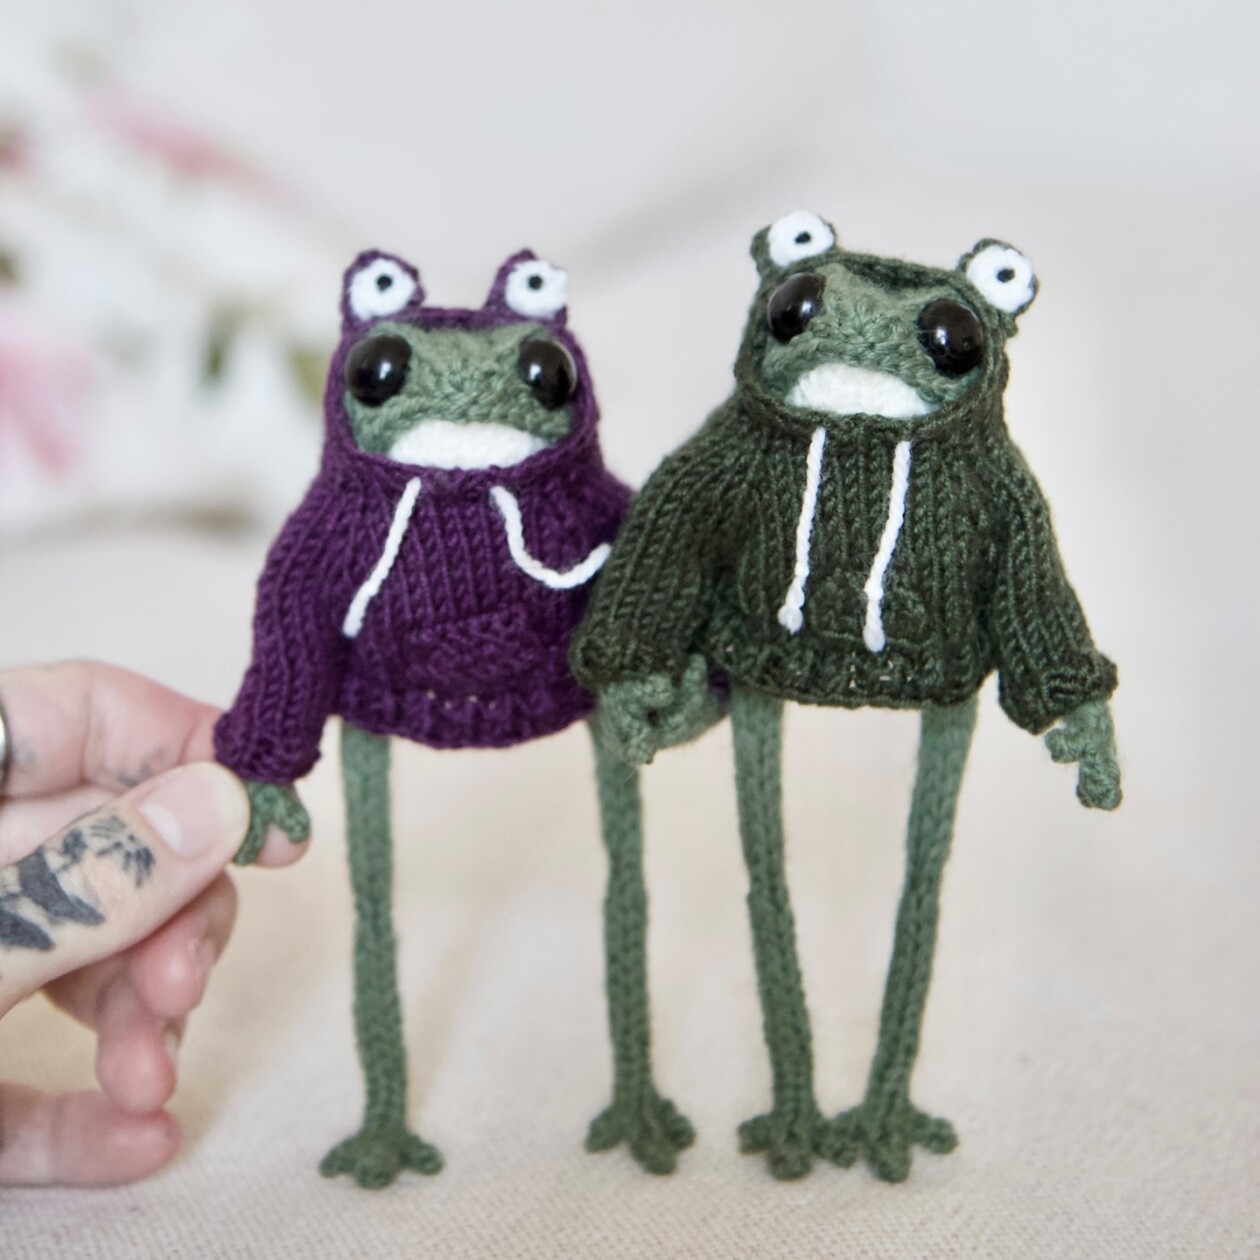 Enchanting Anthropomorphized Frog Crochet Patterns By Elliot (15)